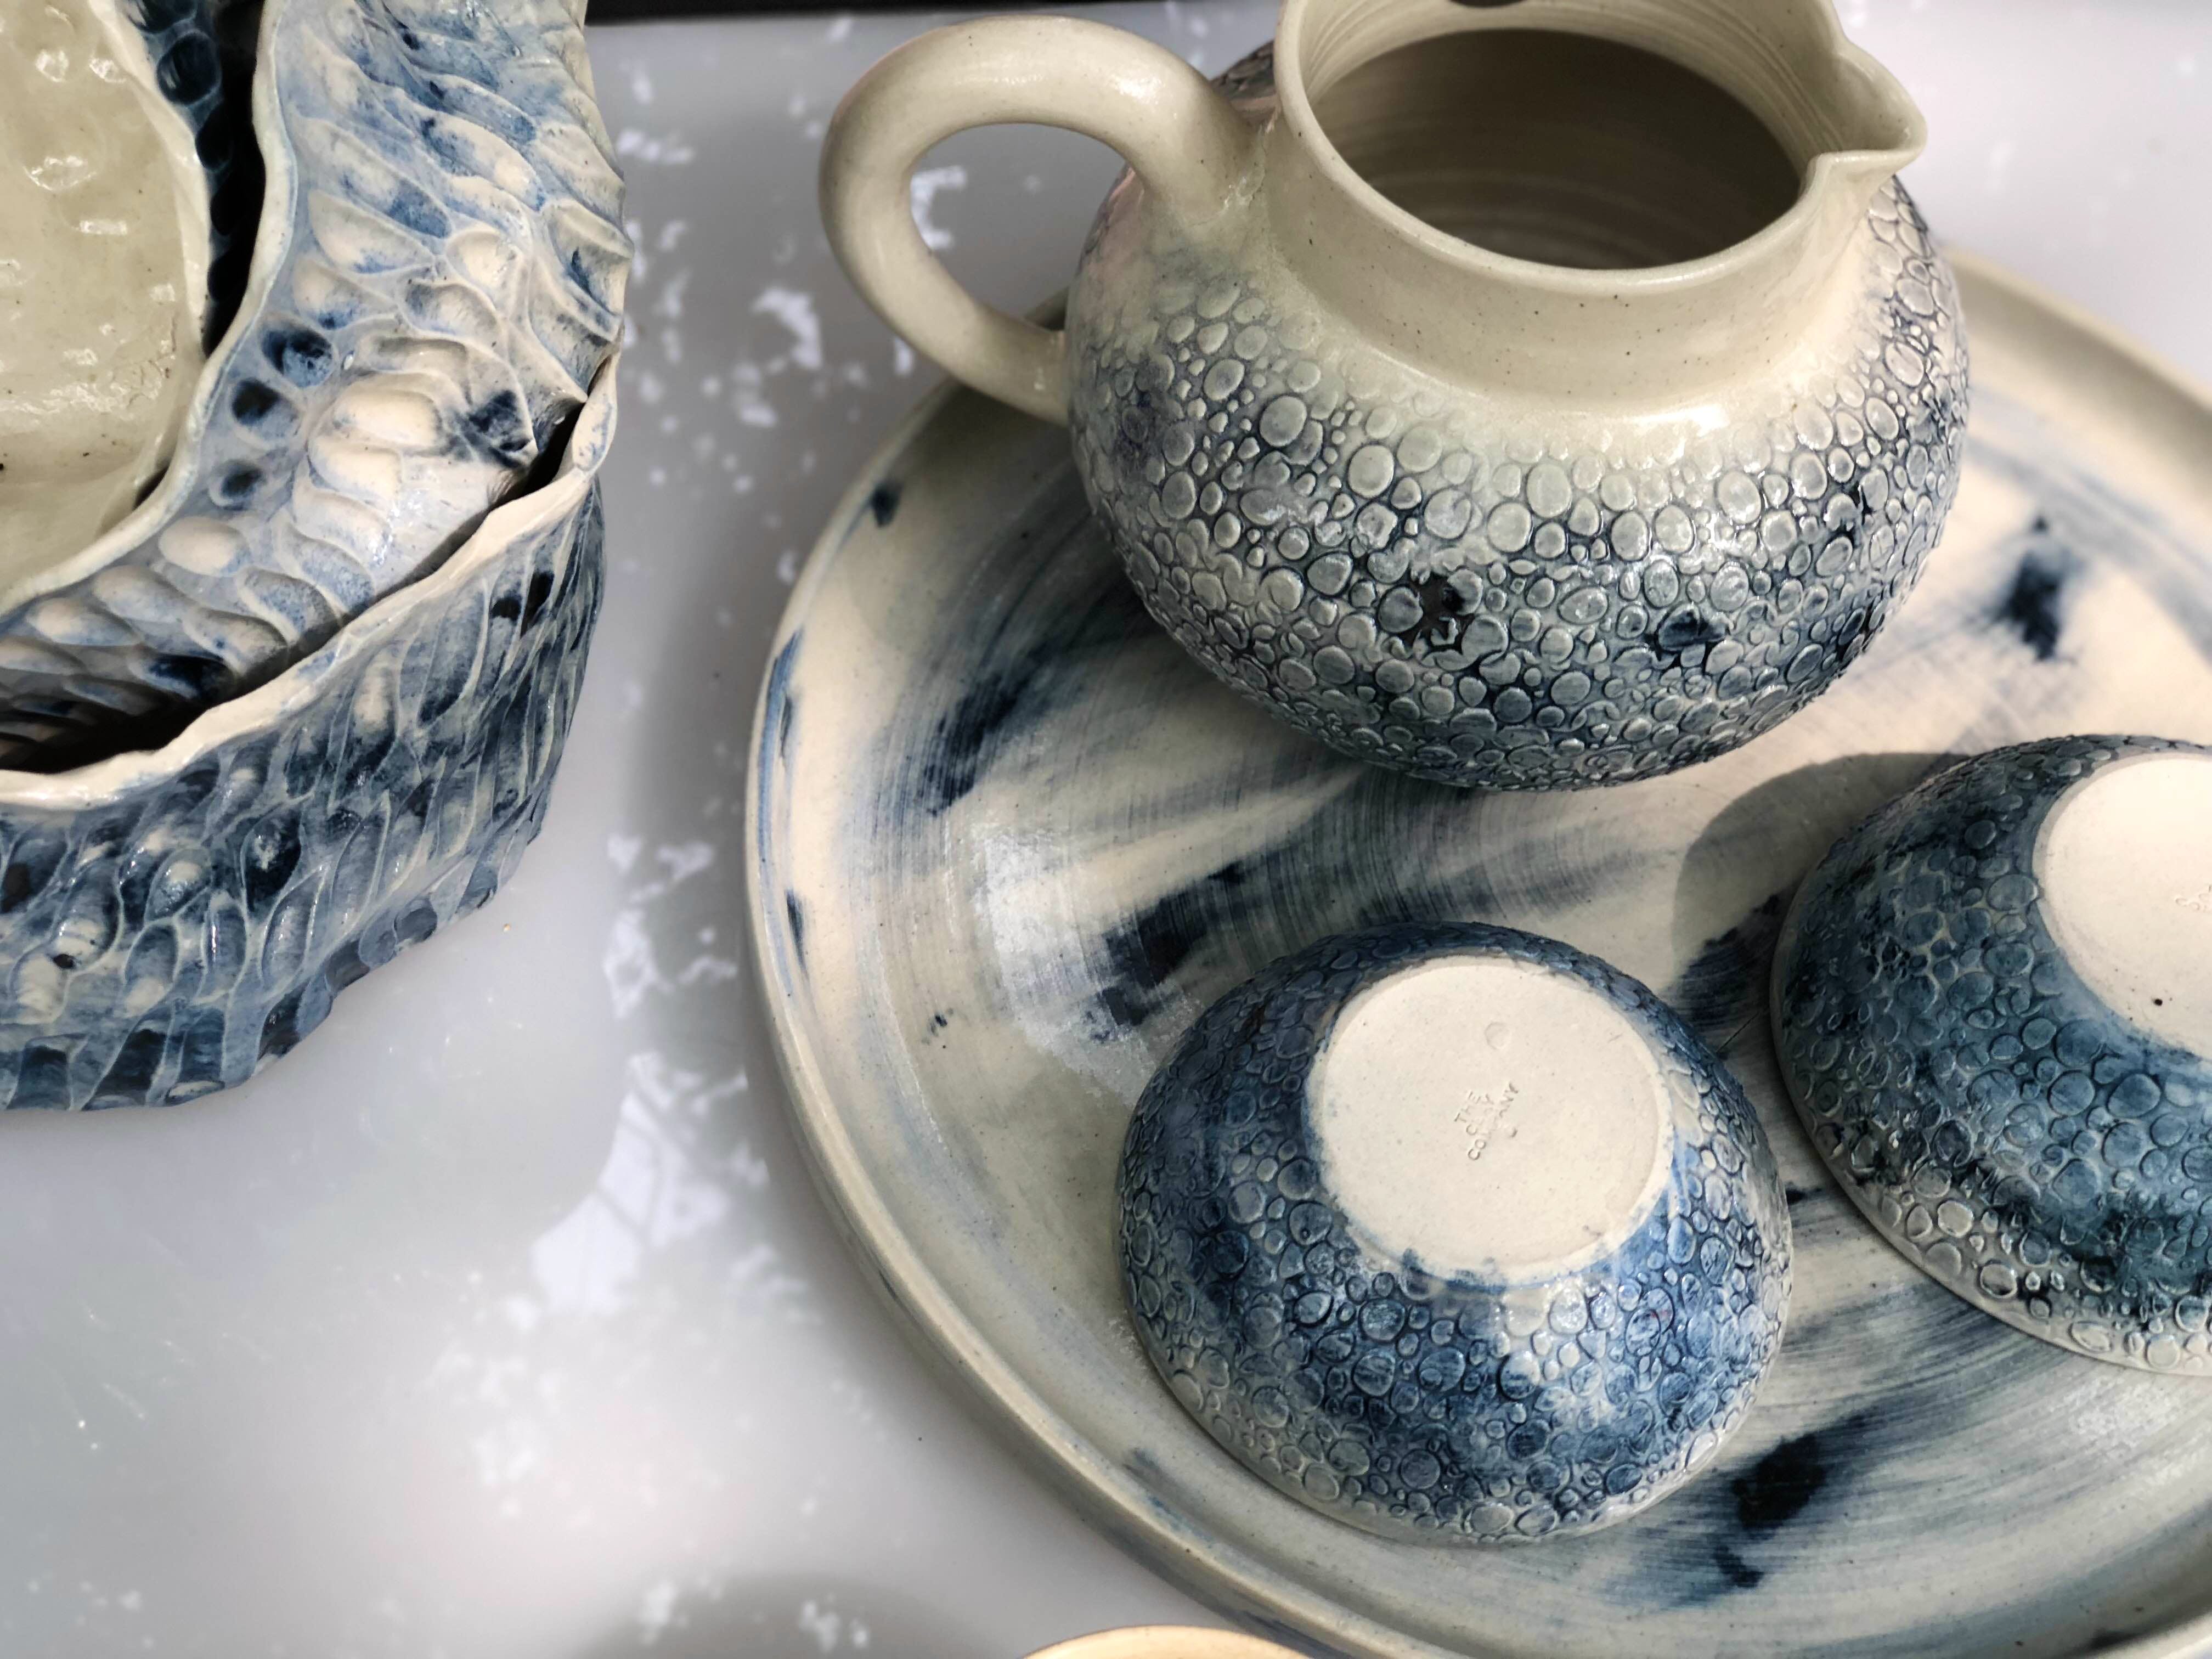 earthenware,Porcelain,Blue and white porcelain,Ceramic,Pottery,Serveware,Teapot,Tableware,Teacup,Dishware